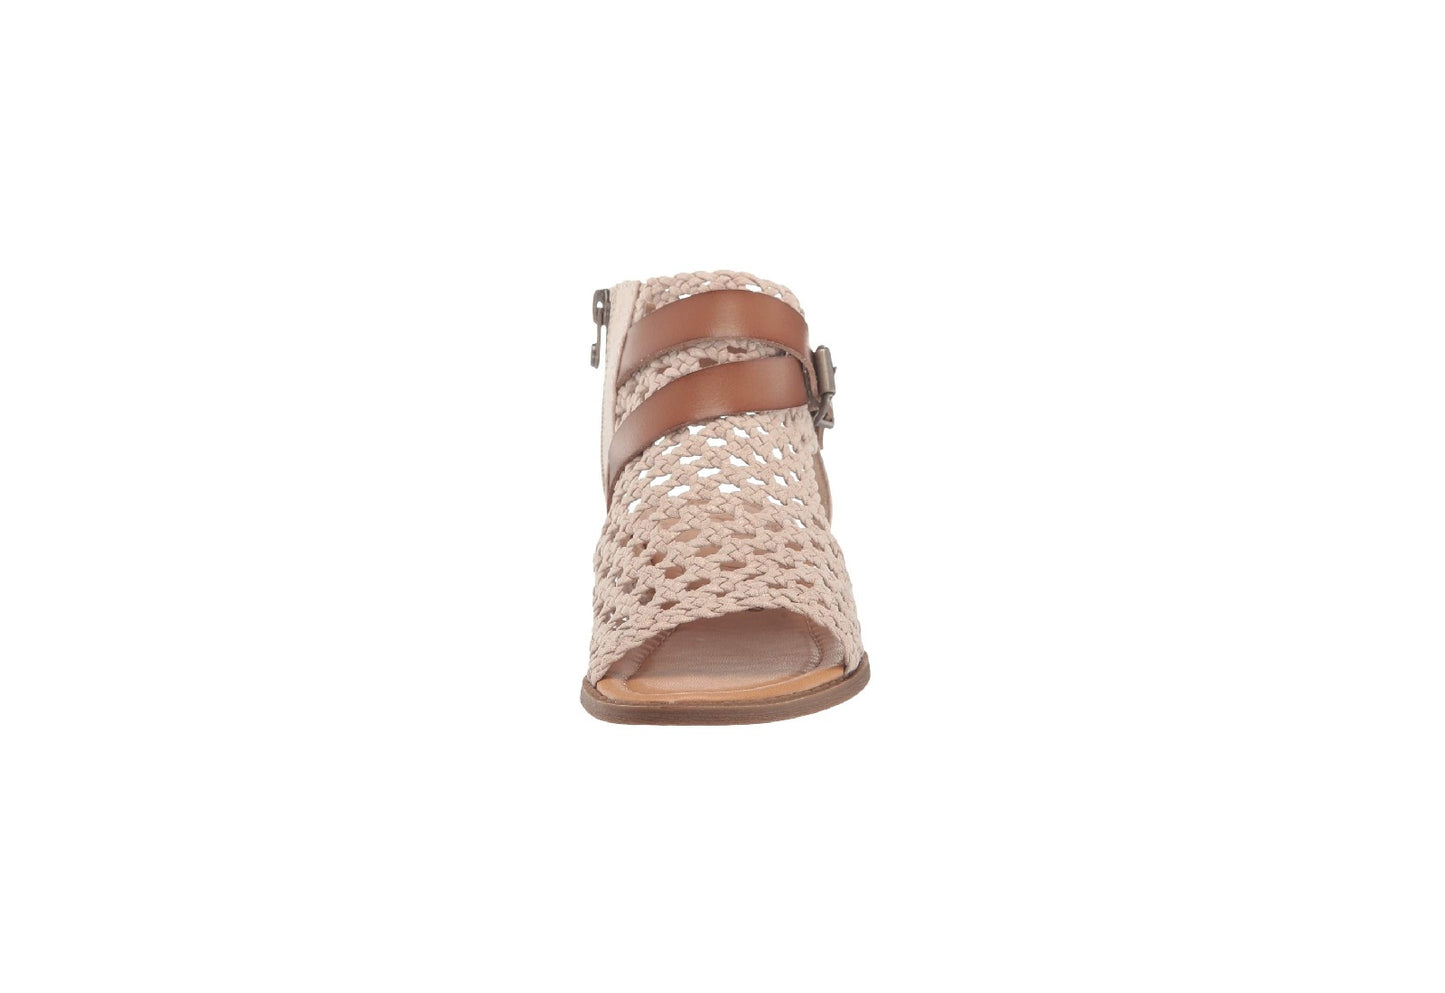 Blowfish Malibu Women's Balla-D Sandals, Gold Woven